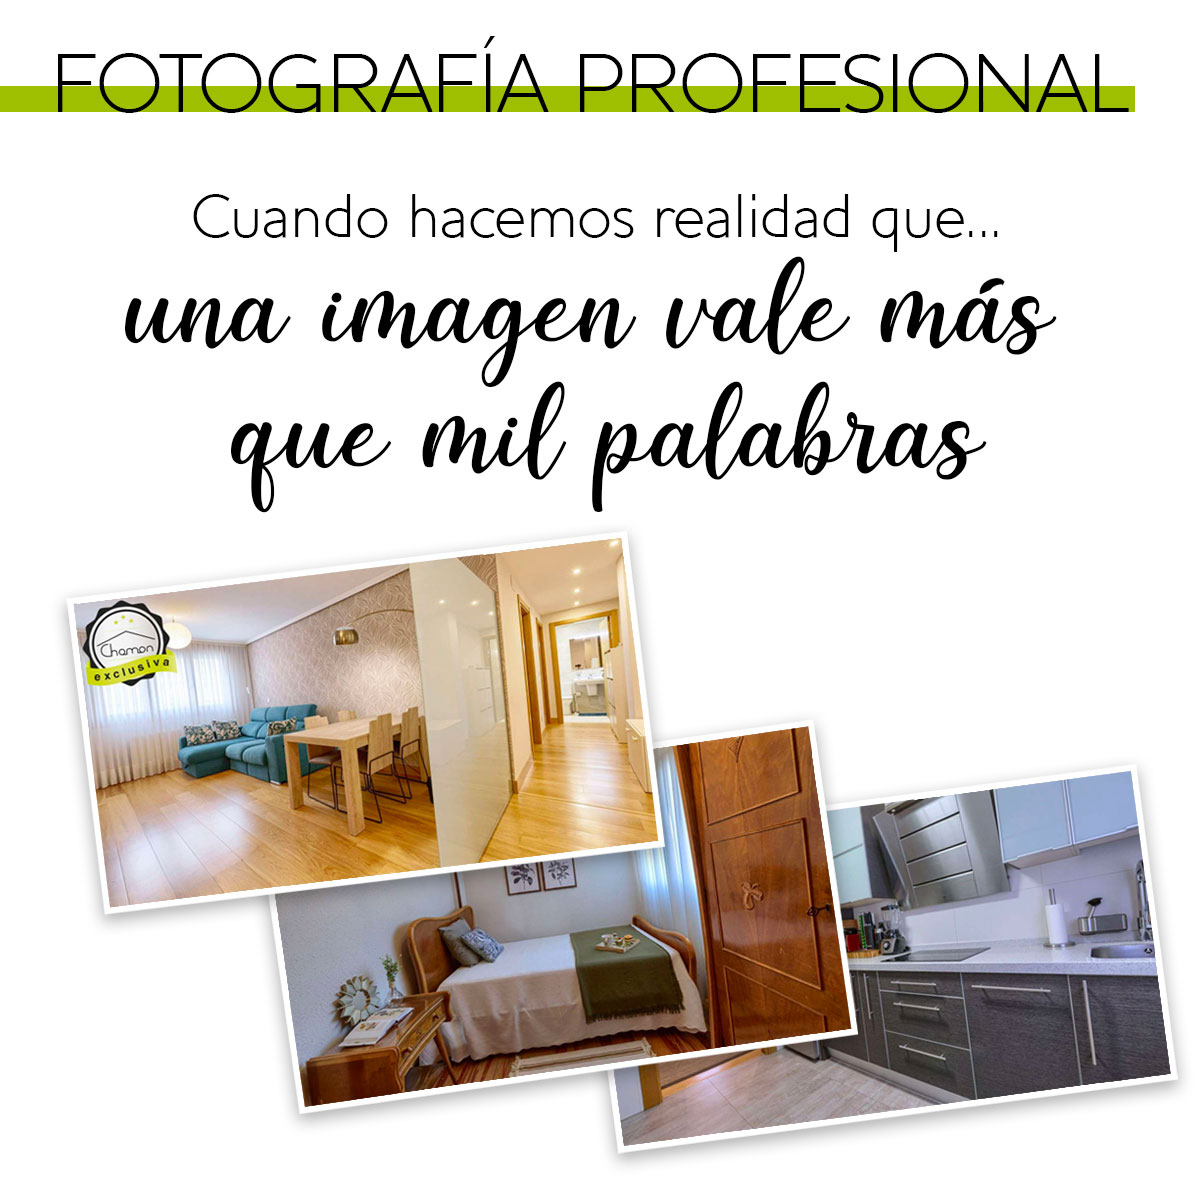 <font color="A7BF38">Las fotos de tu piso hechas por un fotógrafo profesional</font>